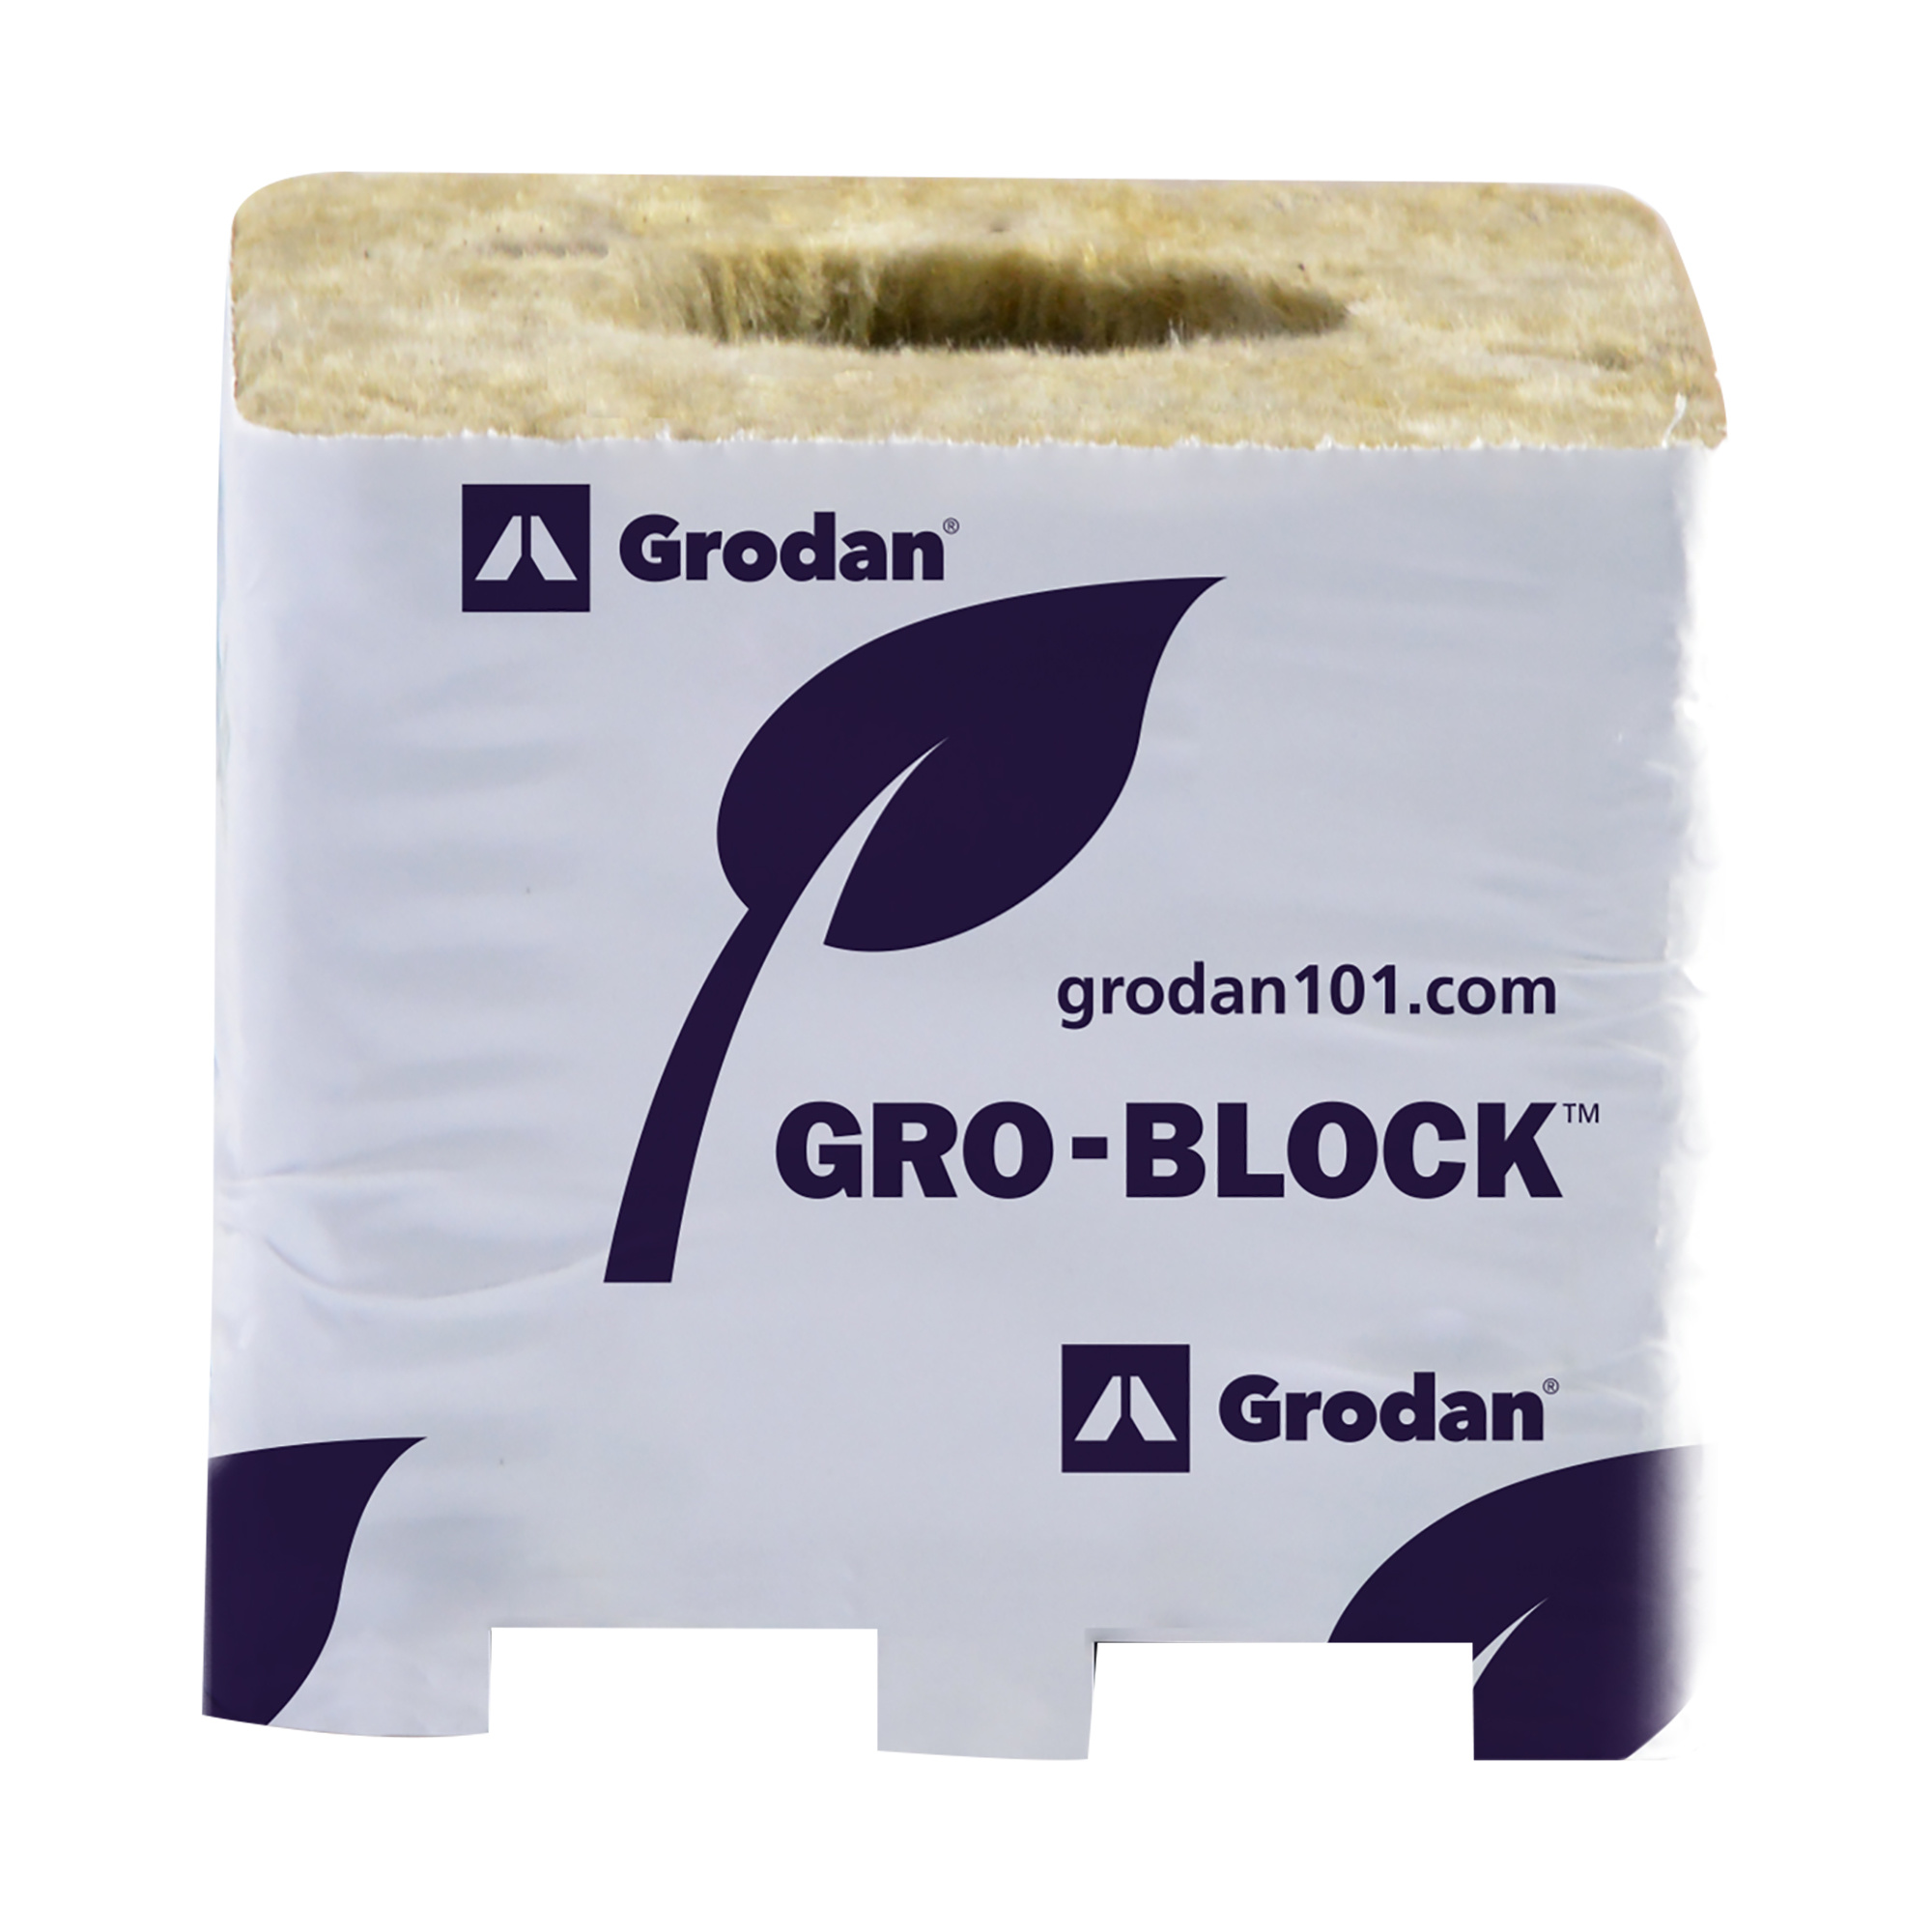 Grodan Gro-Block Improved GR4 Small w/Hole 3" x 3" x 2.6"